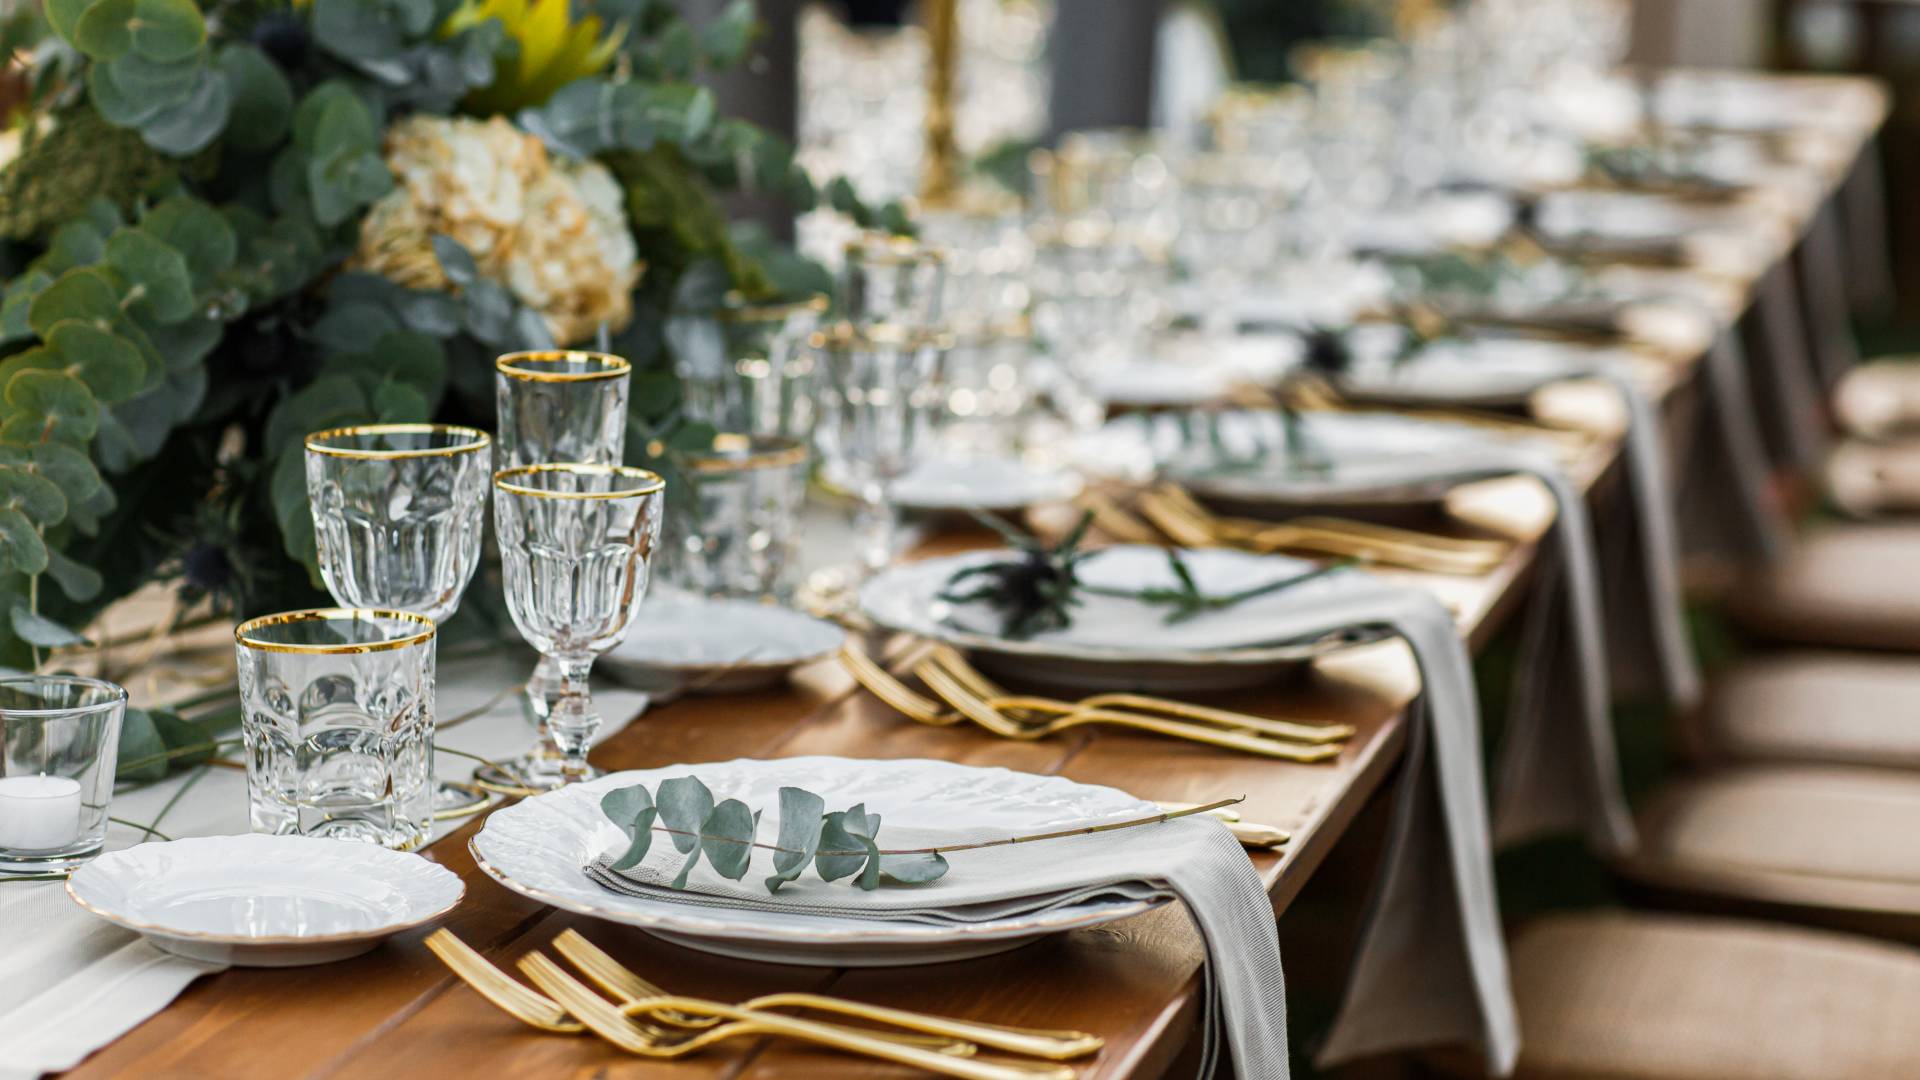 Wedding Table with plate and glasses setup